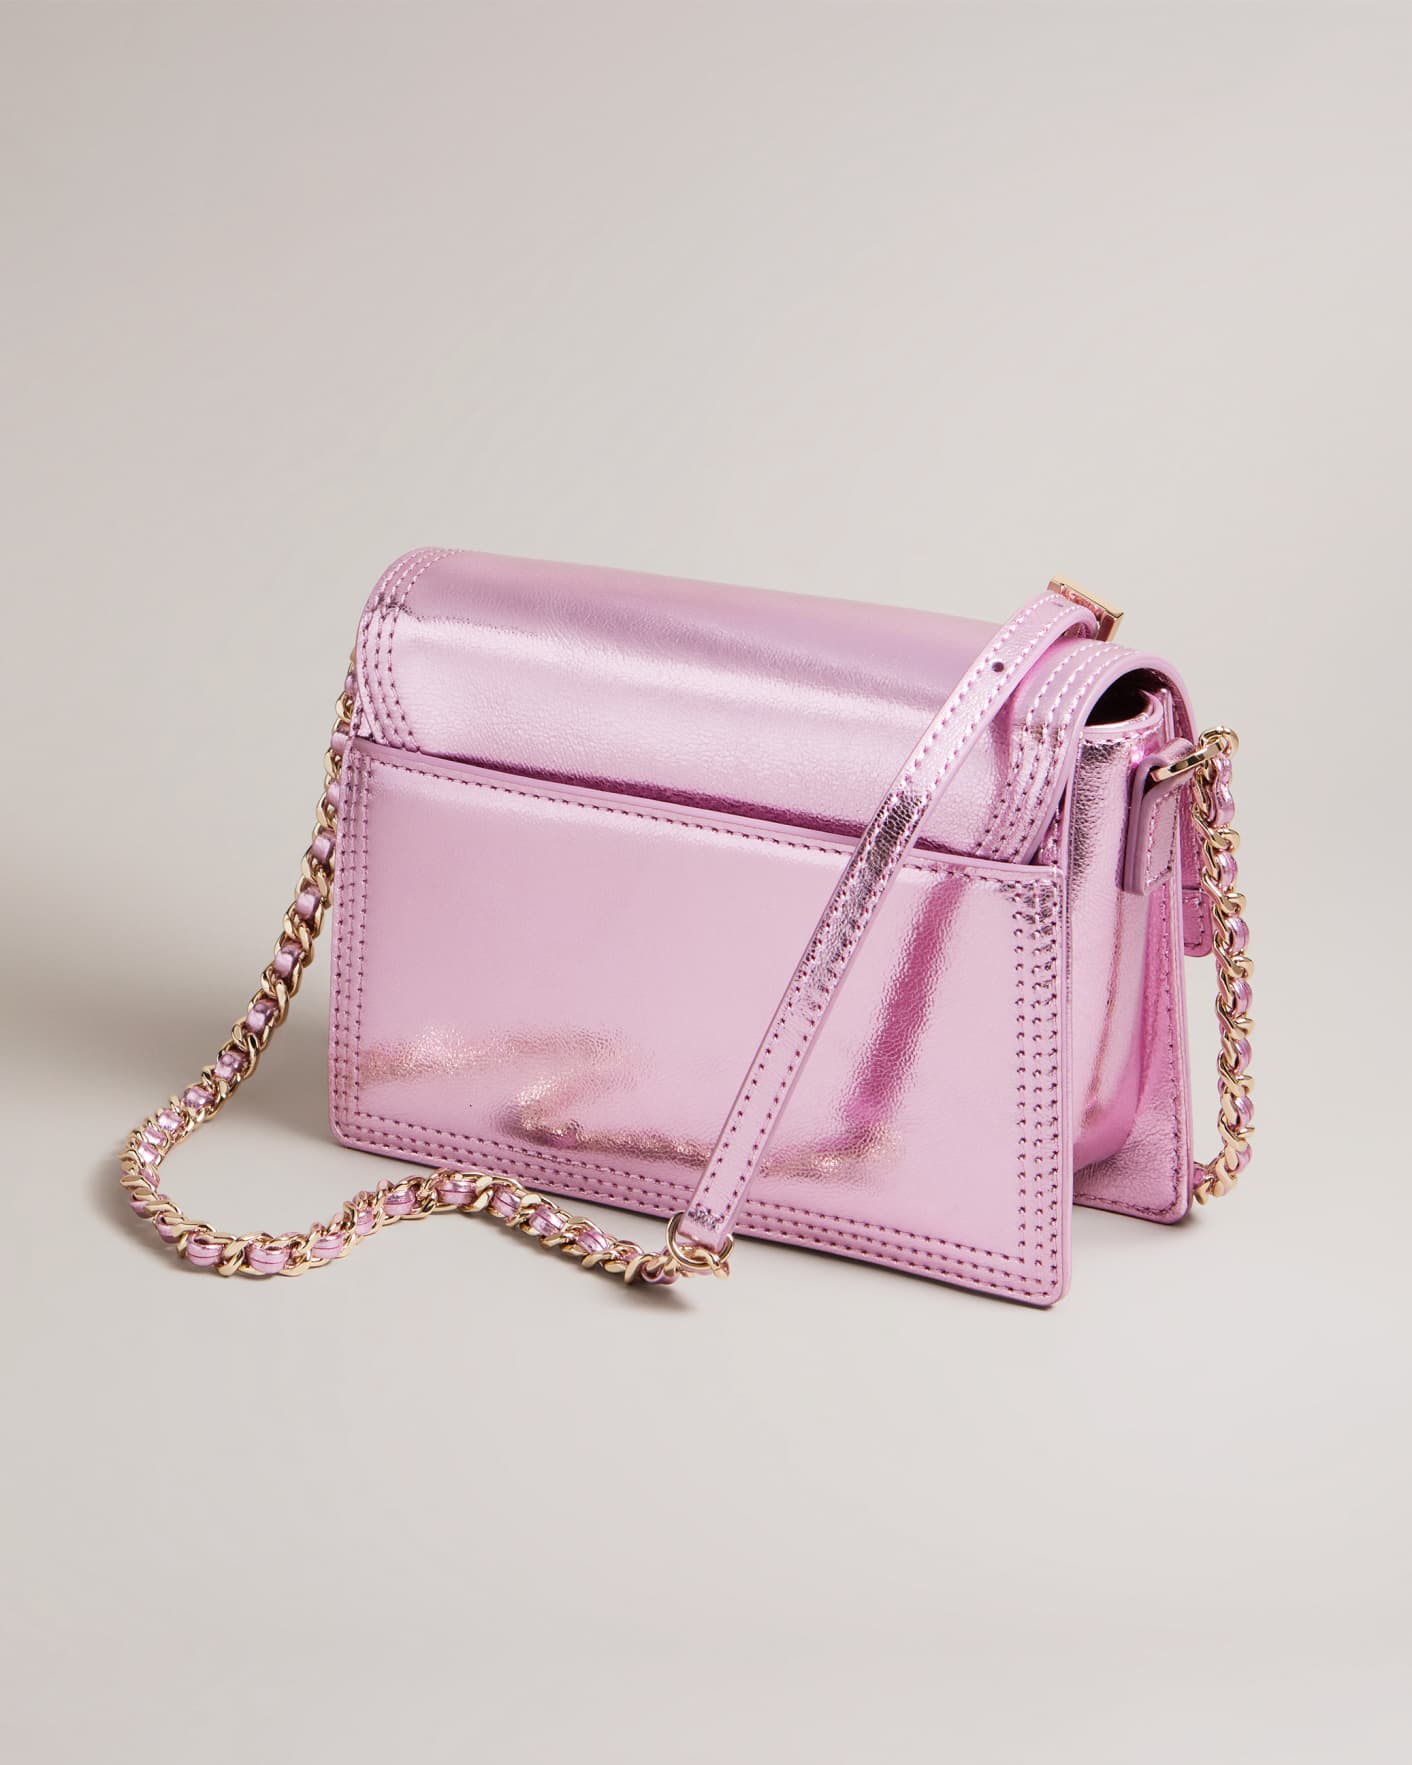 Ladies Ted Baker bag - Pink Leather - Croc - Side bag, cross body - BNWT  RRP£160